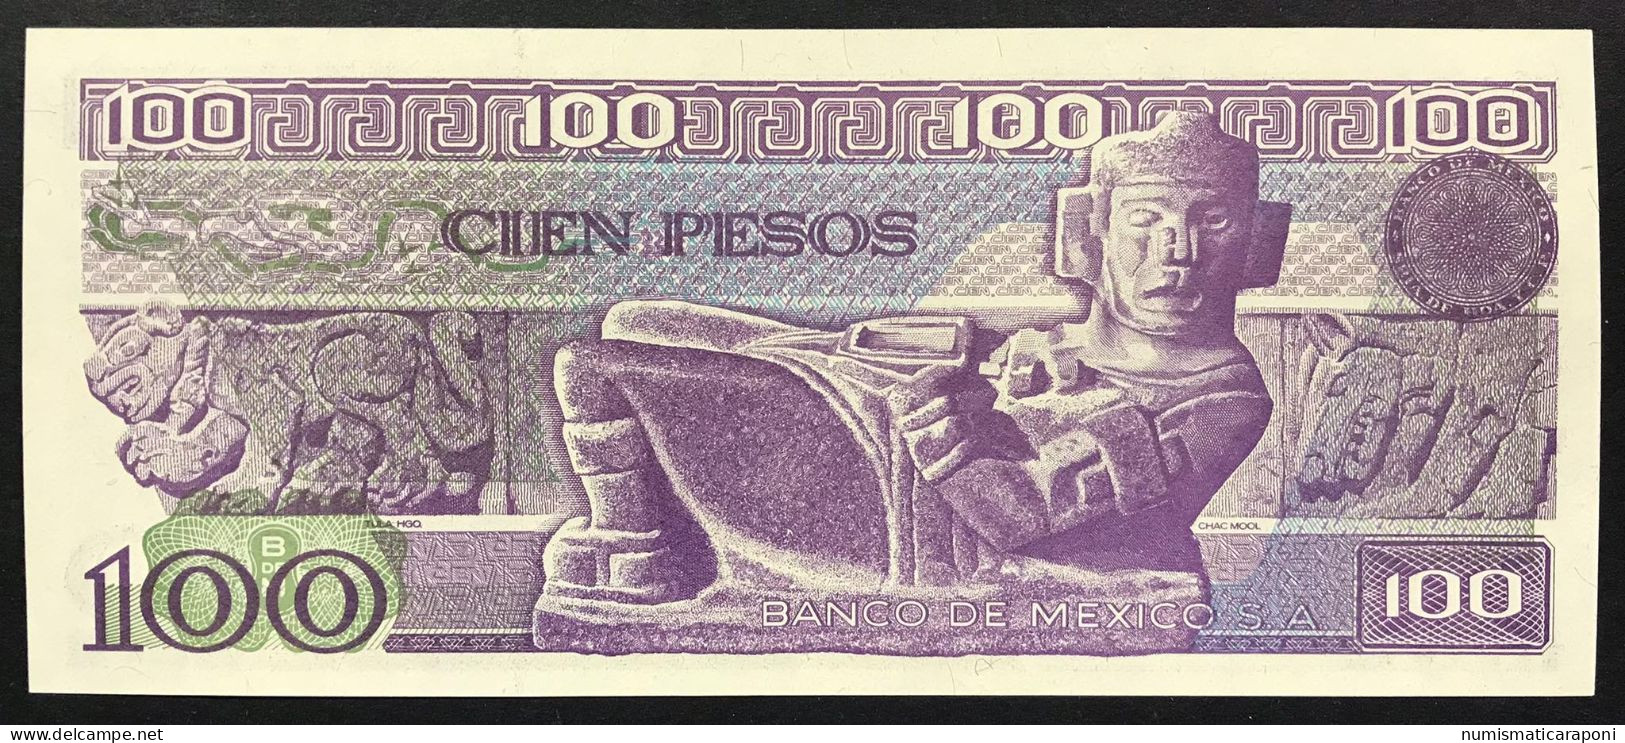 Messico MEJICO MEXICO 1982 100 PESOS Fds LOTTO 4470 - Mexico